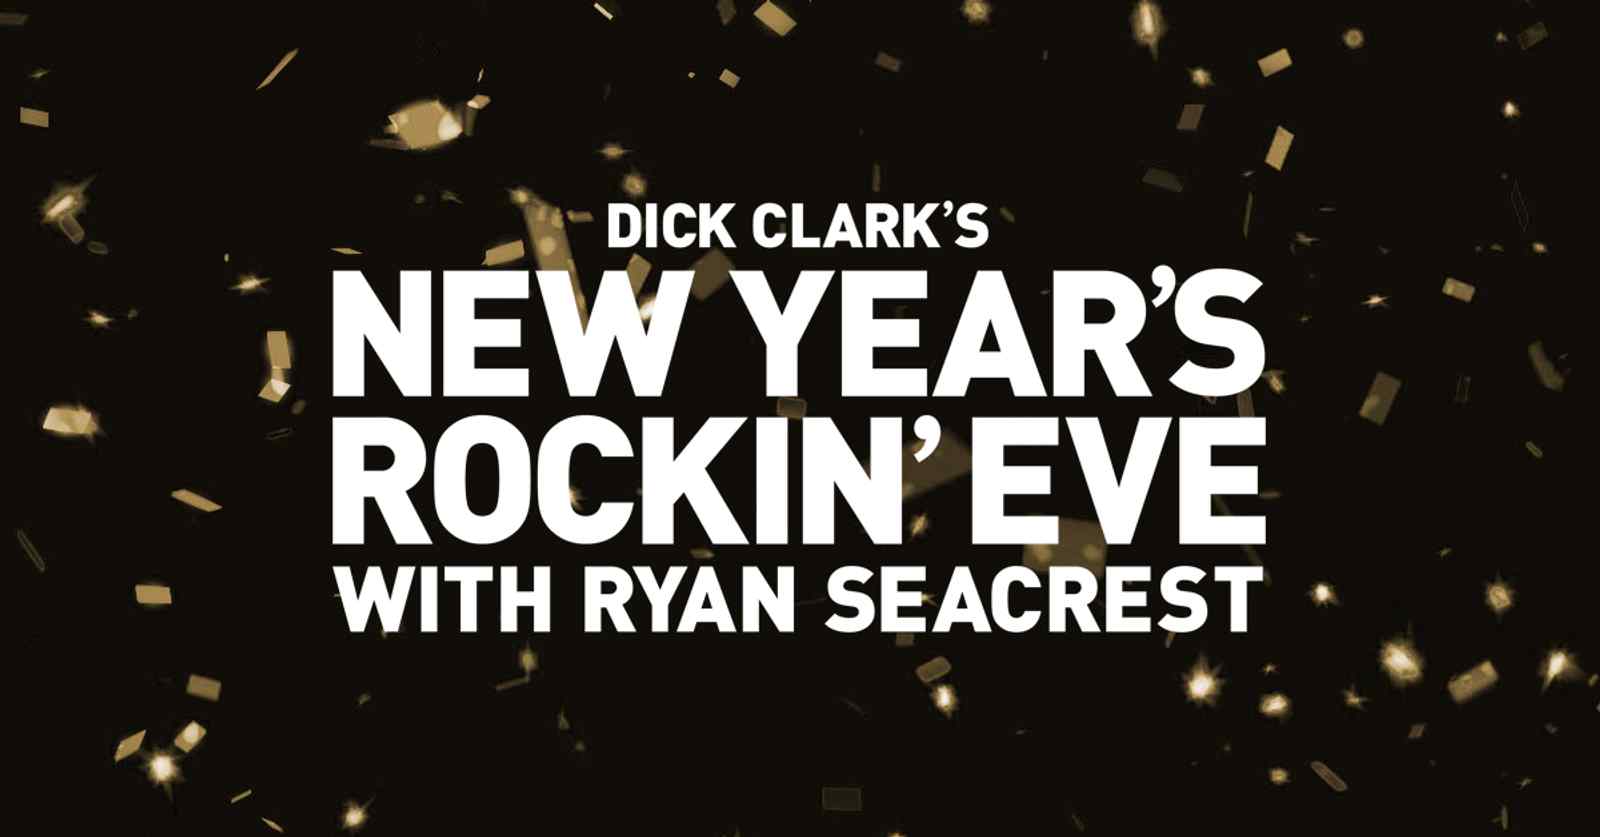 Dick Clark’s New Year’s Rockin’ Eve with Ryan Seacrest